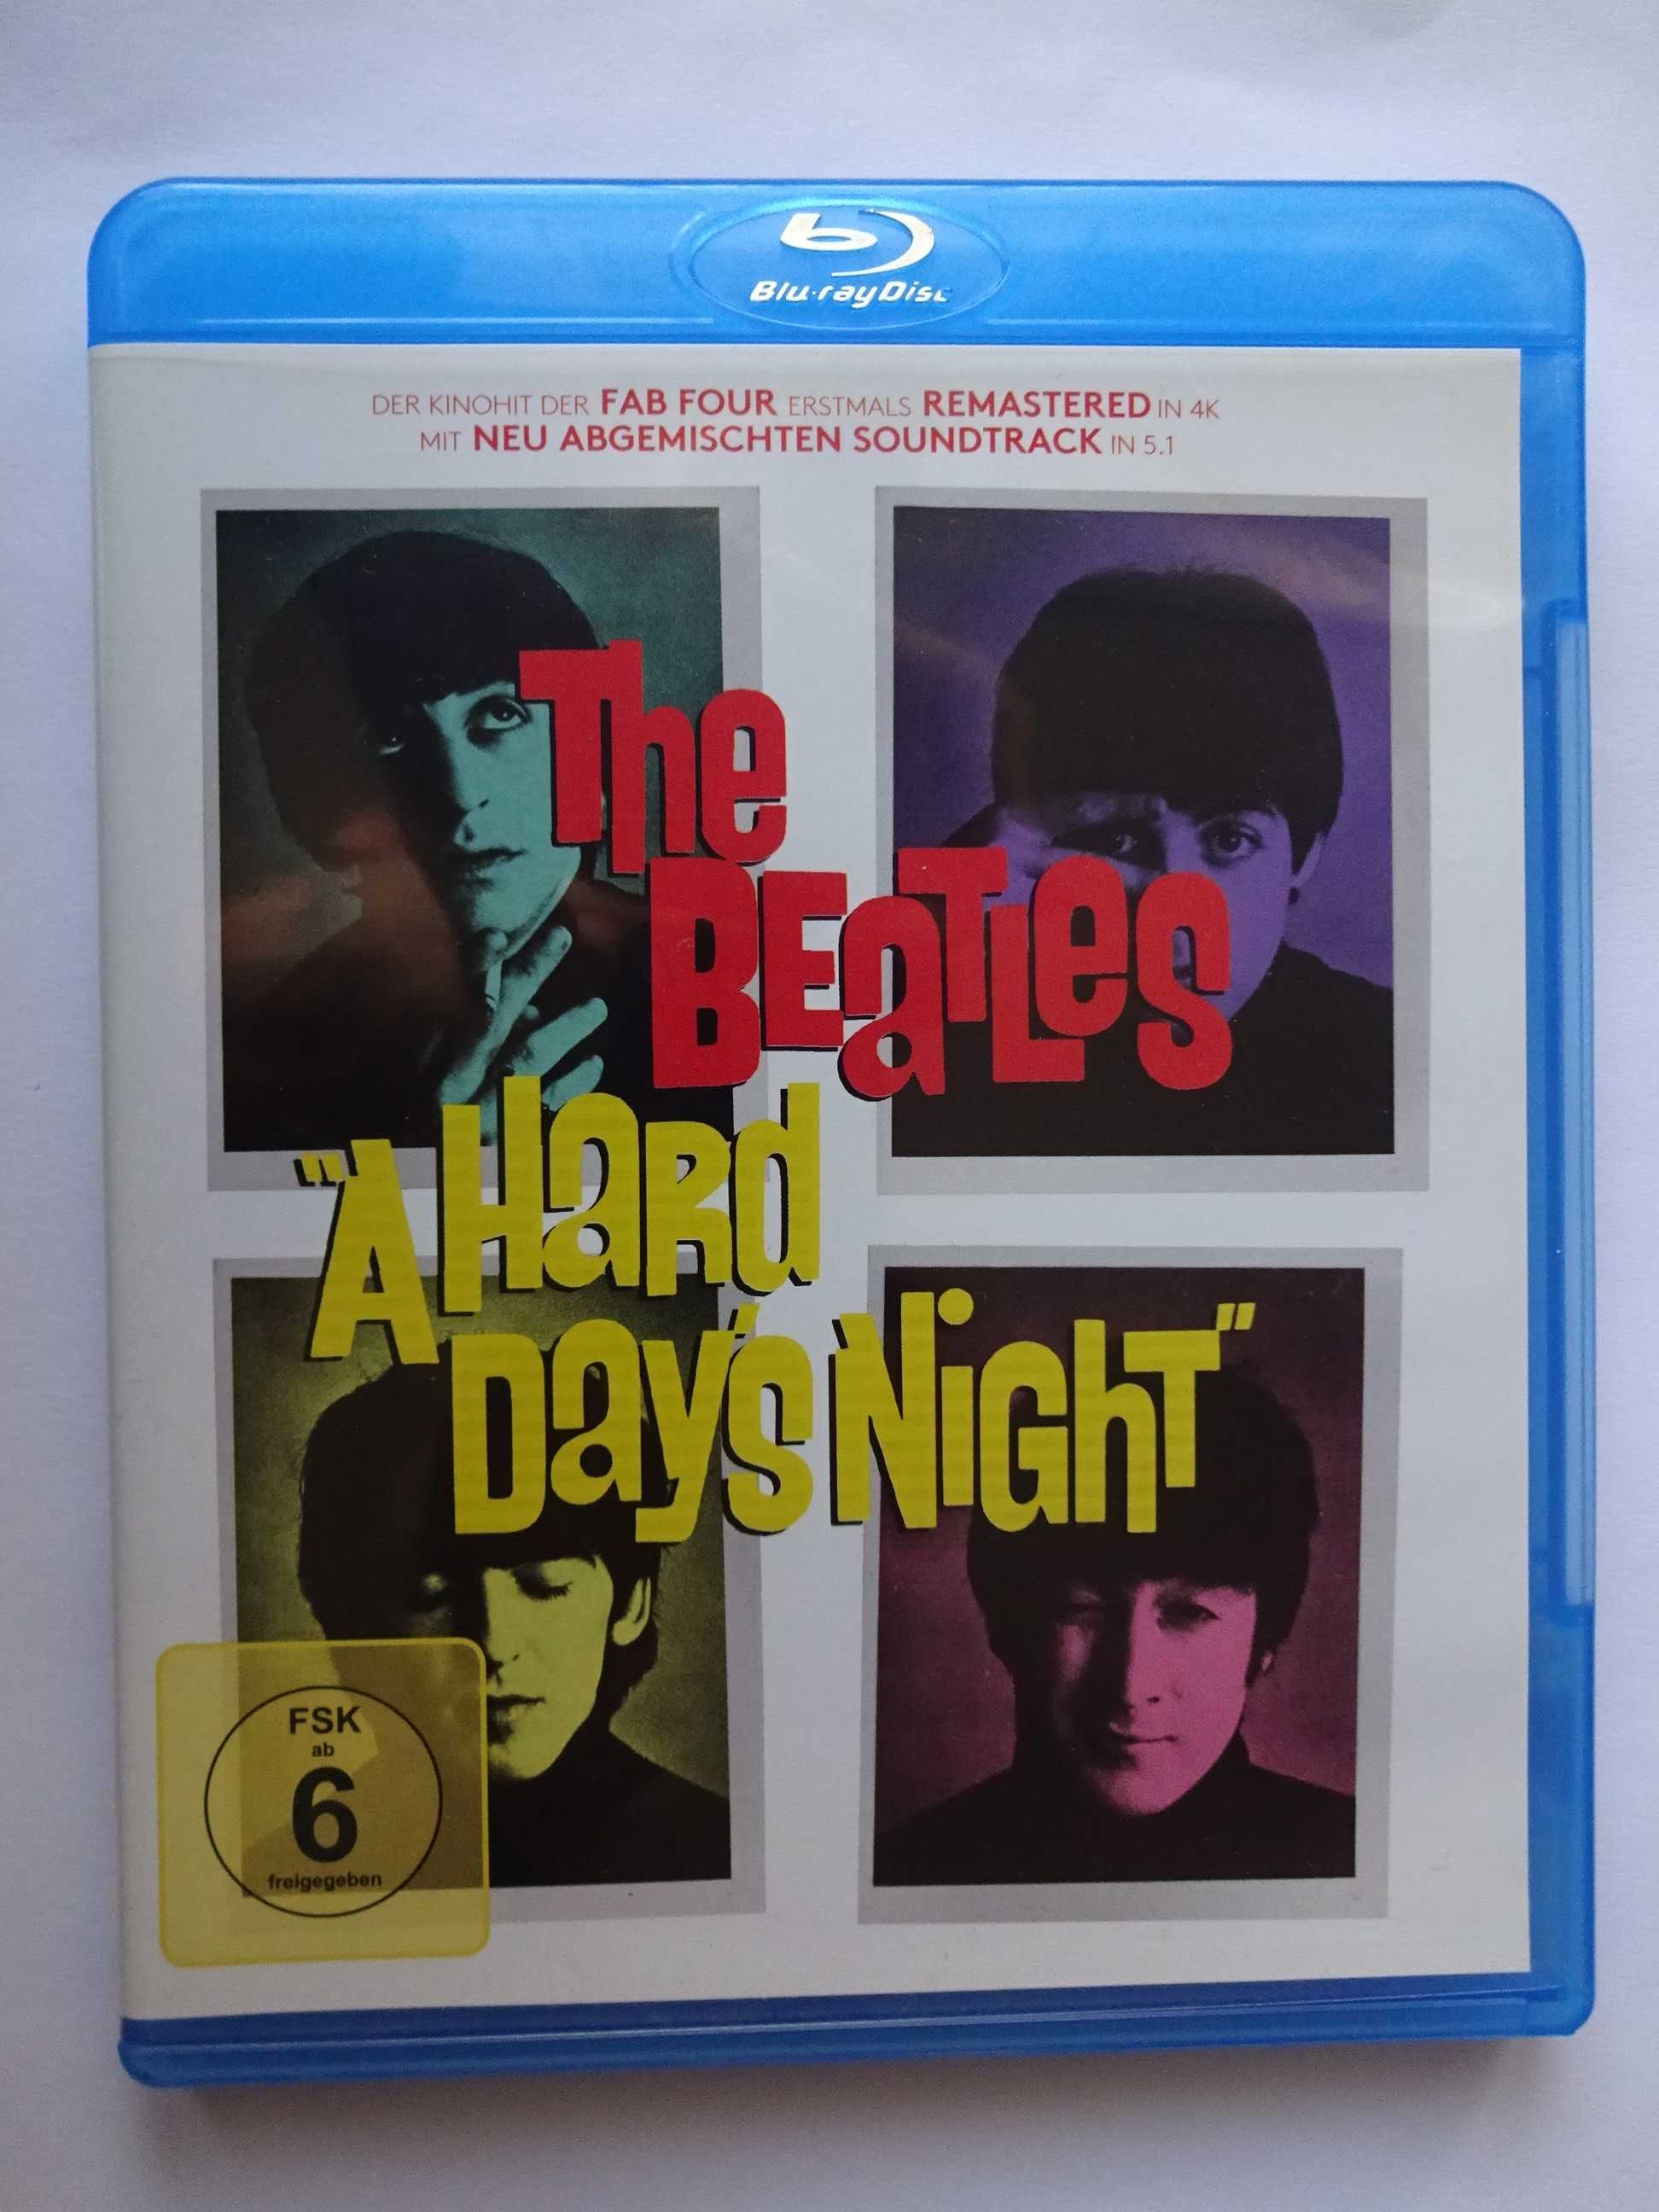 The Beatles A Hard Days Night / Film / Blu-ray